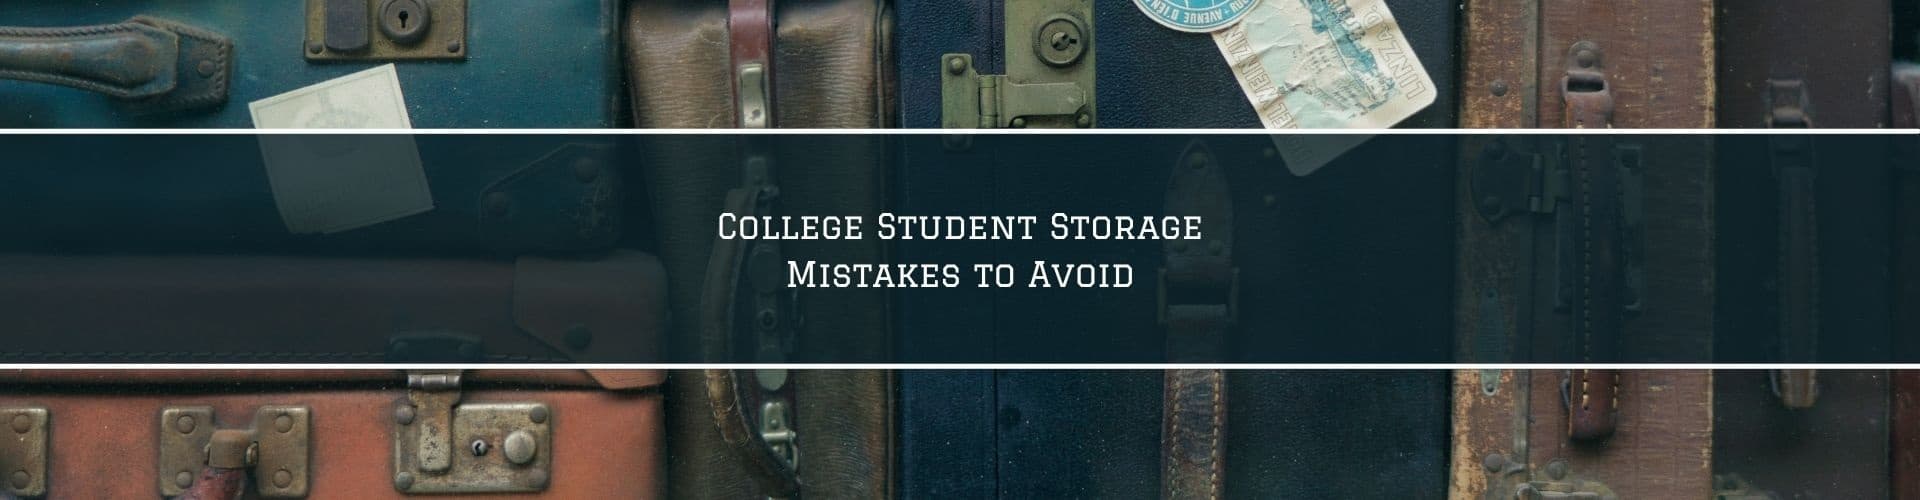 College Student Storage Image